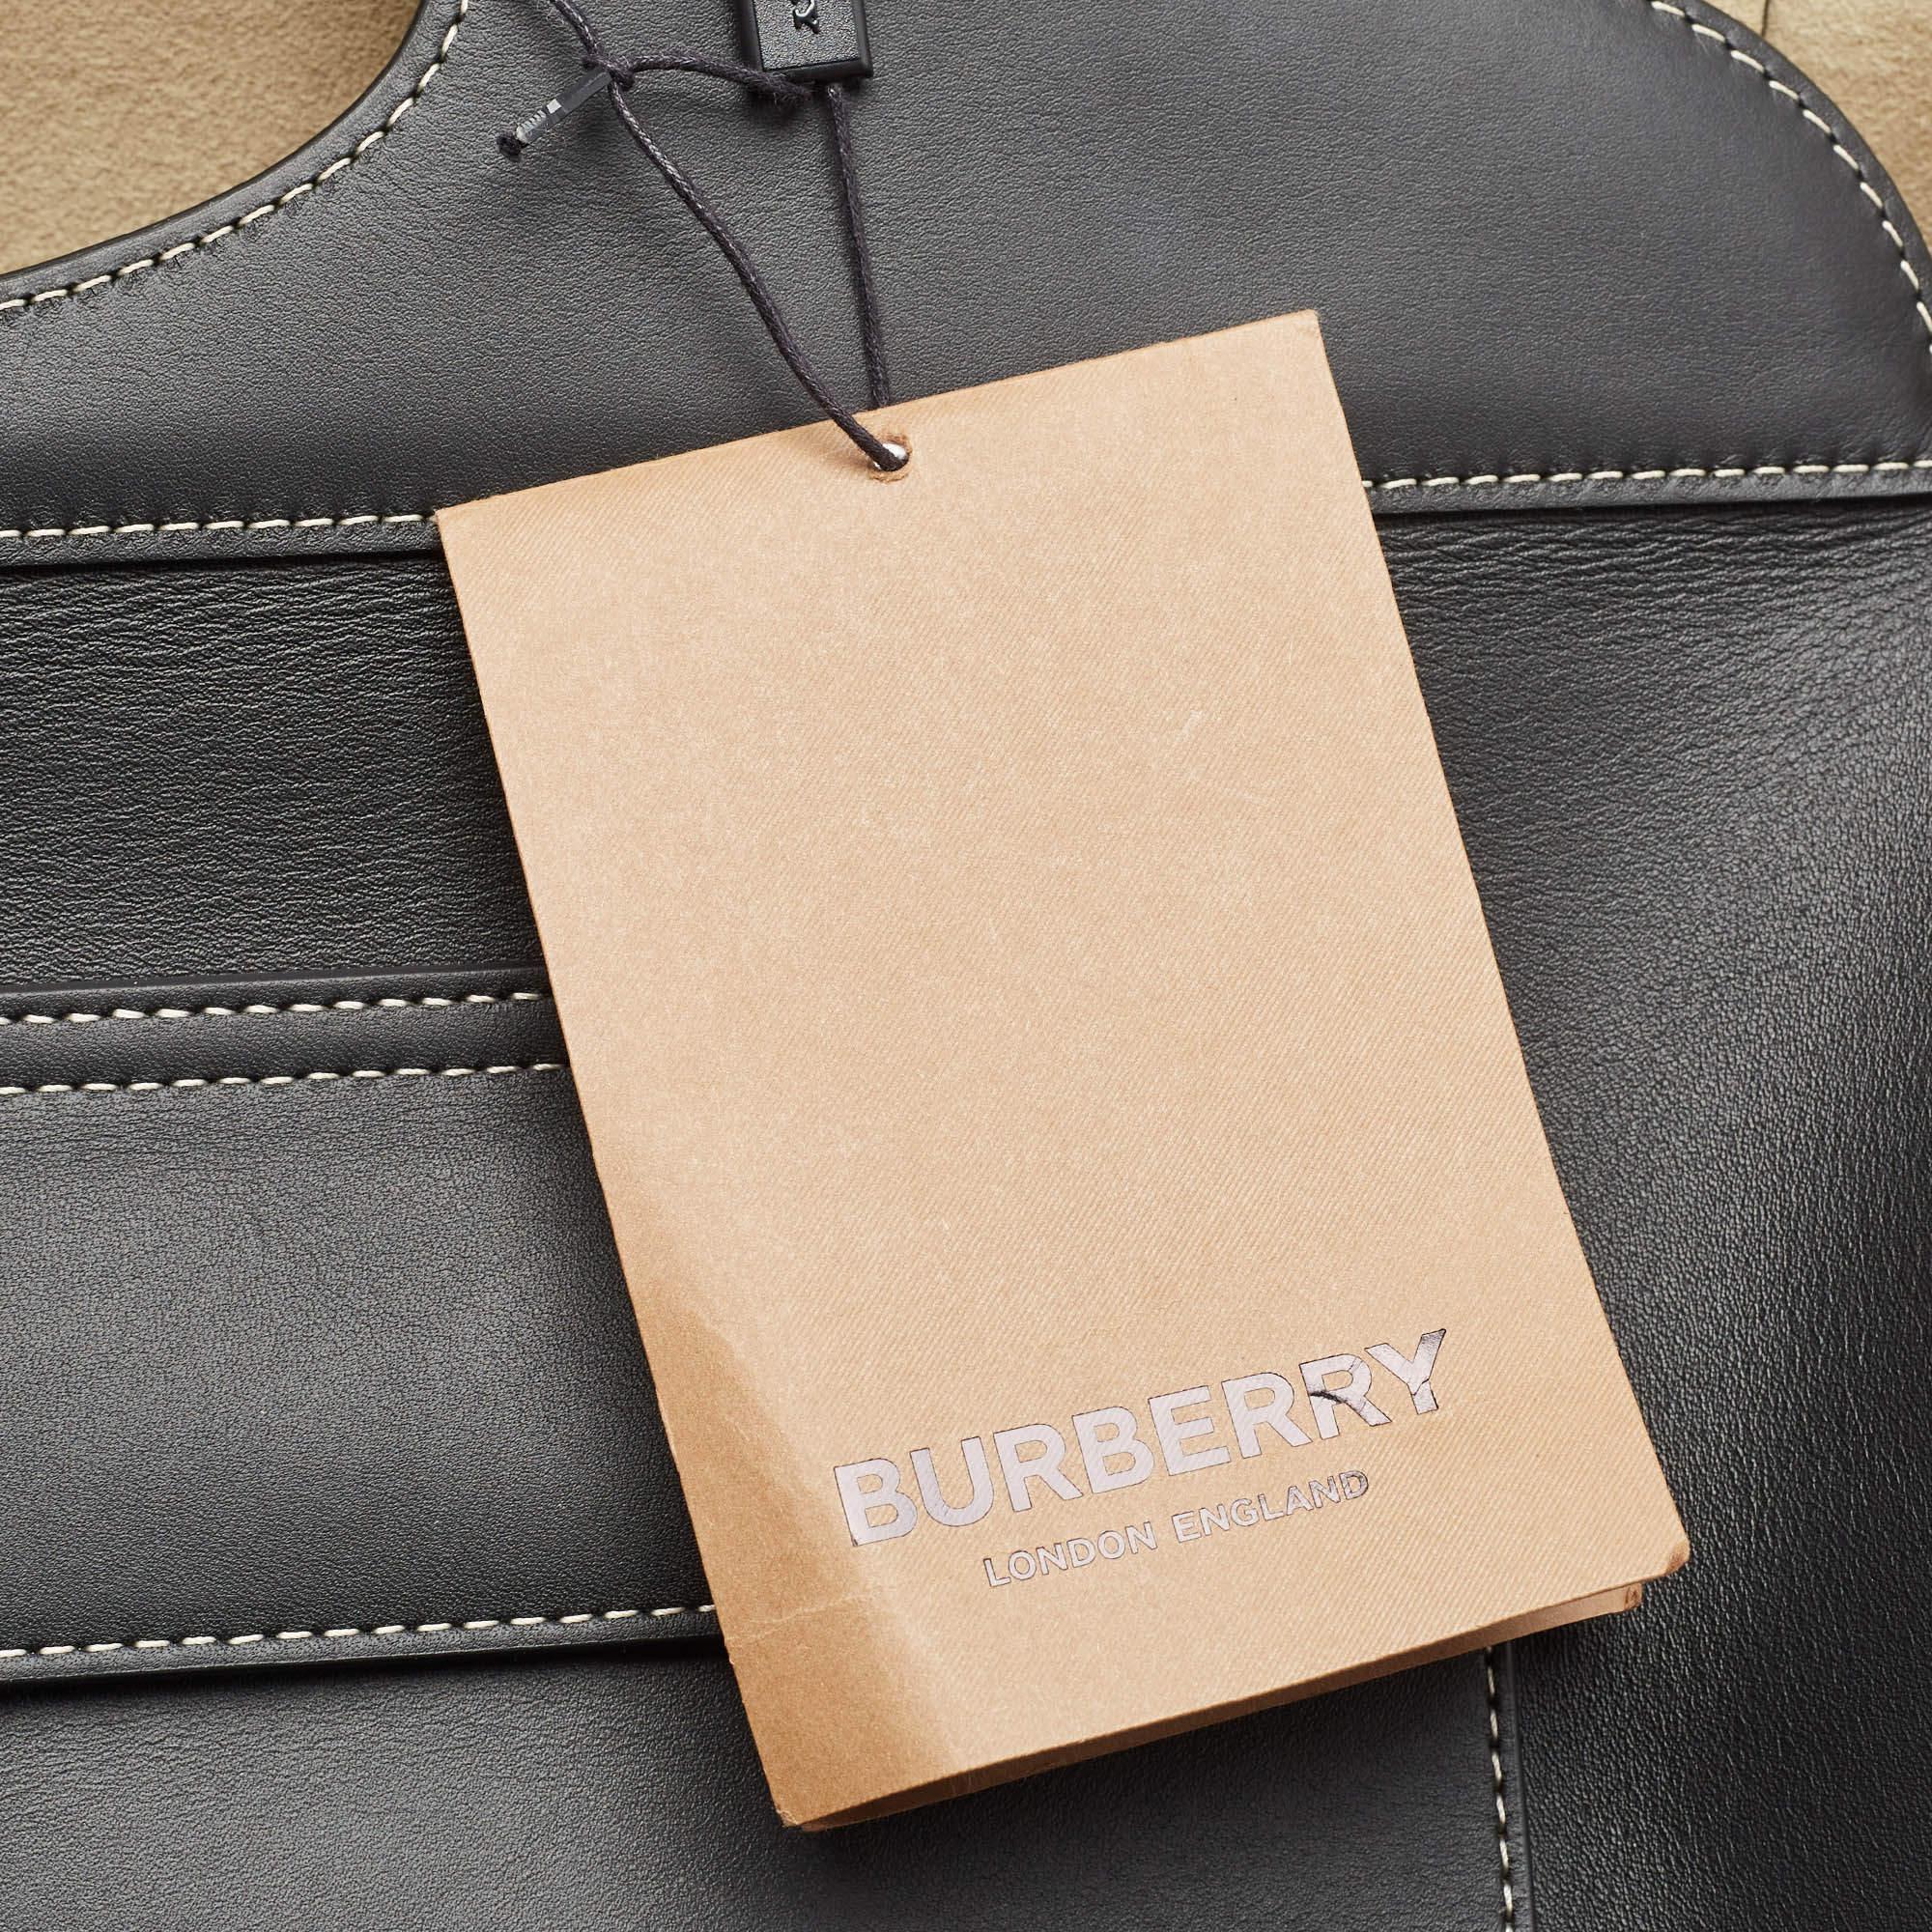 Burberry Black Leather Medium Soft Pocket Tote For Sale 4